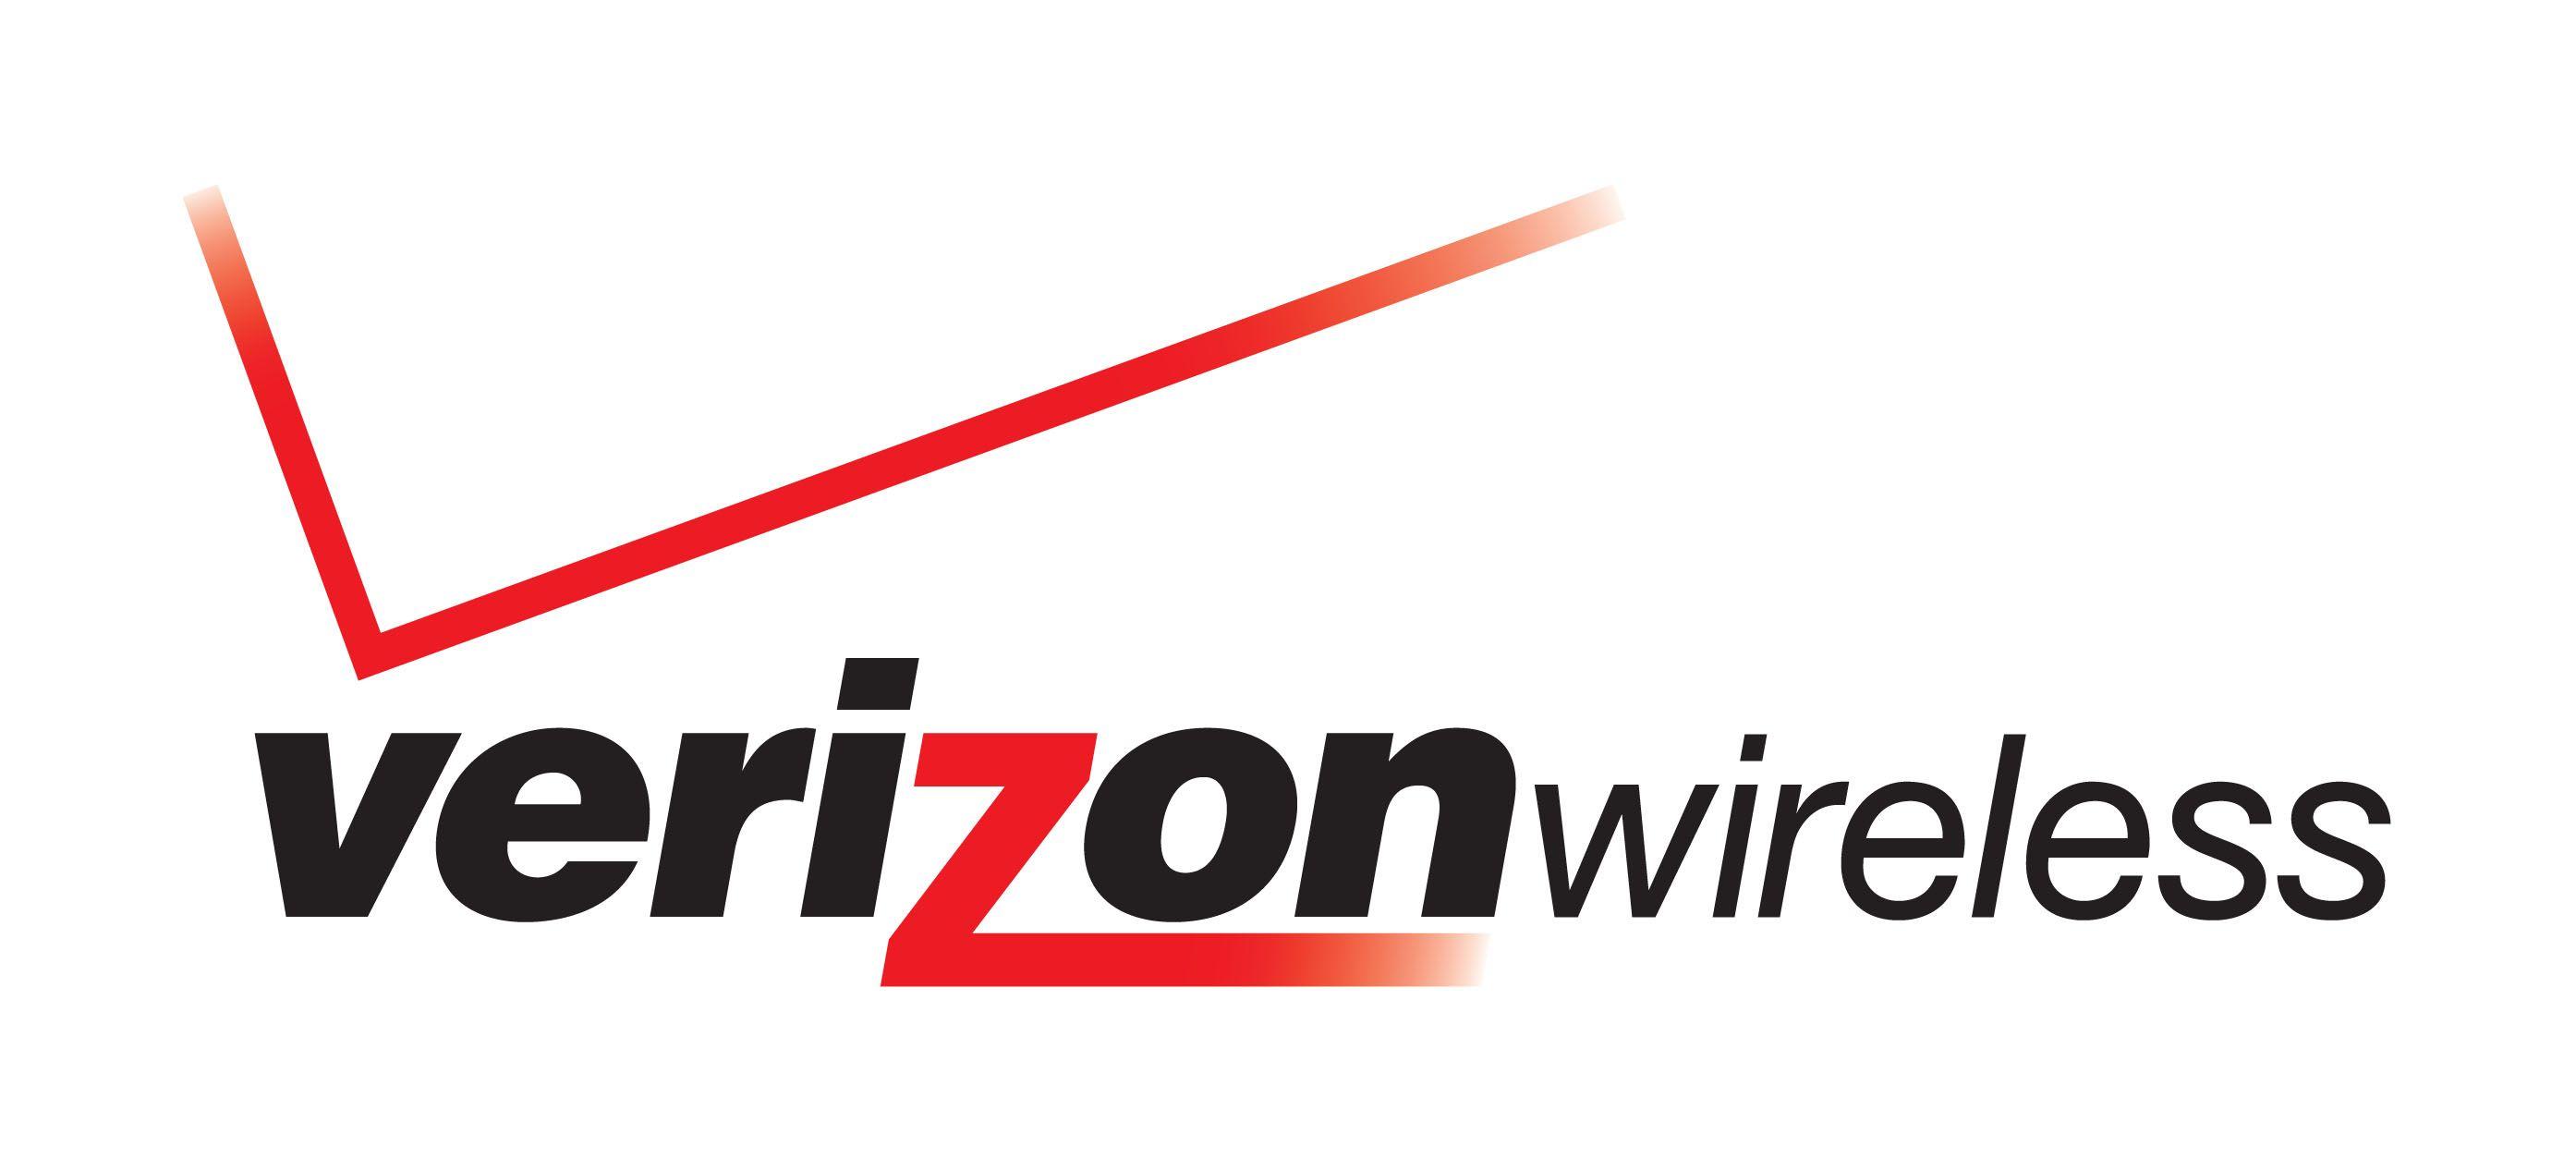 New Verizon Logo - Debbie Millman: Verizon's new logo is 'boring' - Business Insider